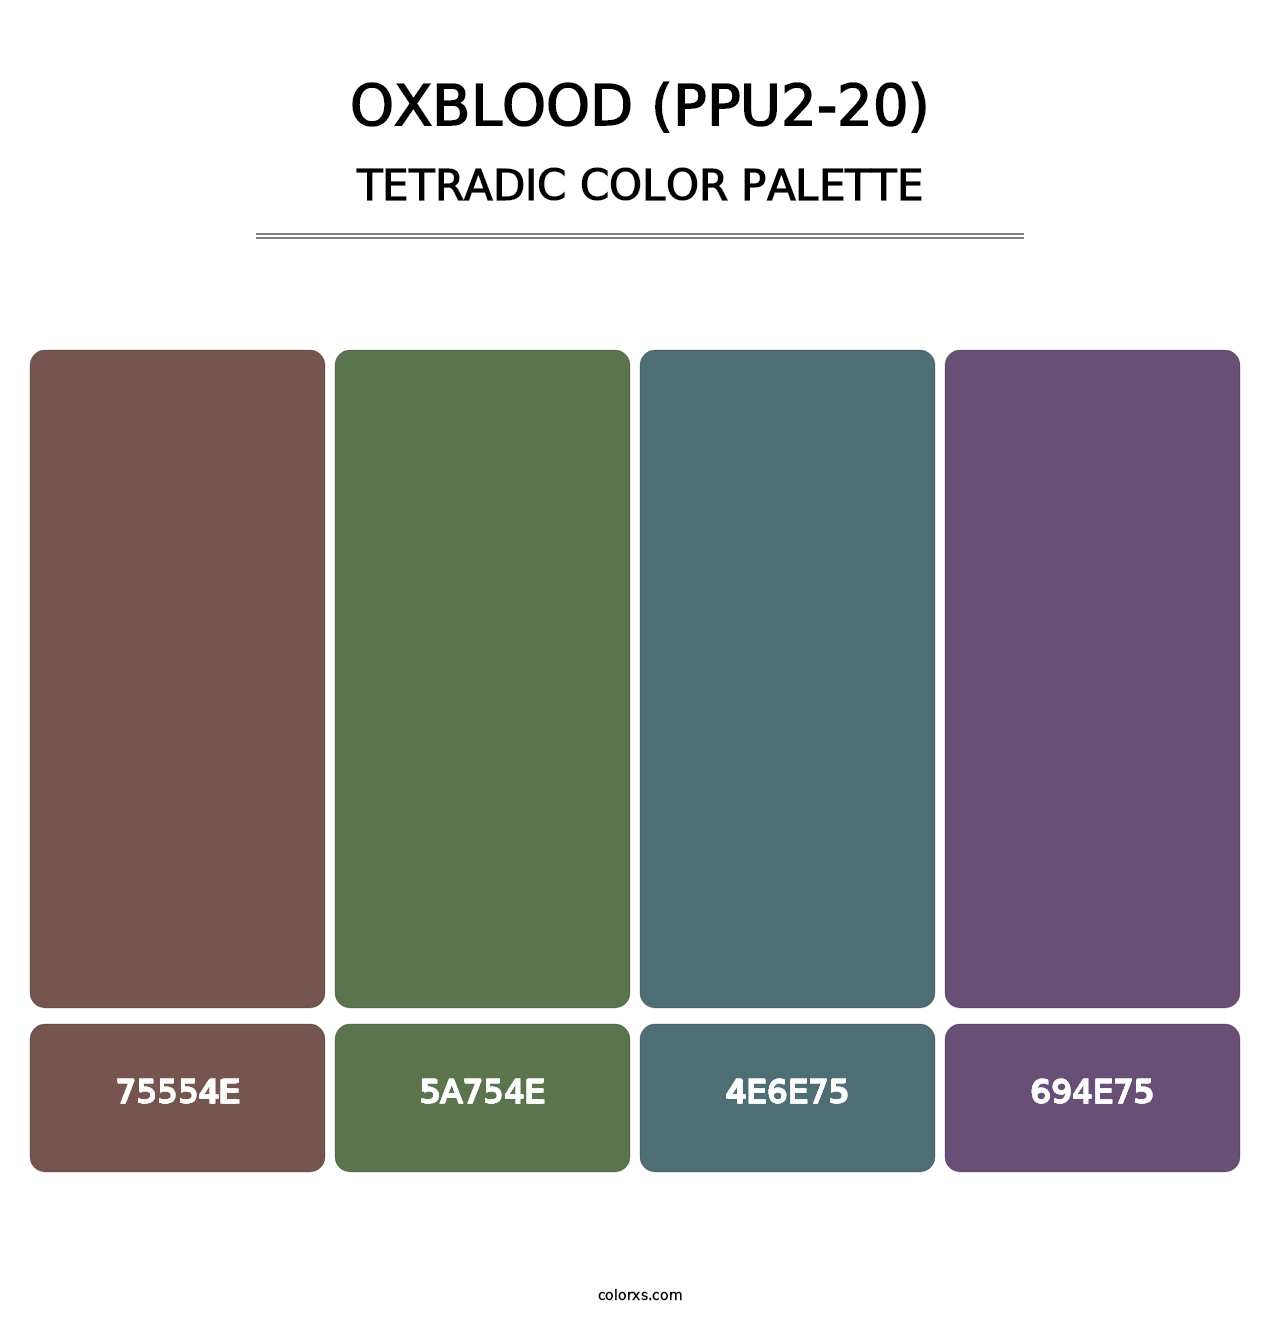 Oxblood (PPU2-20) - Tetradic Color Palette